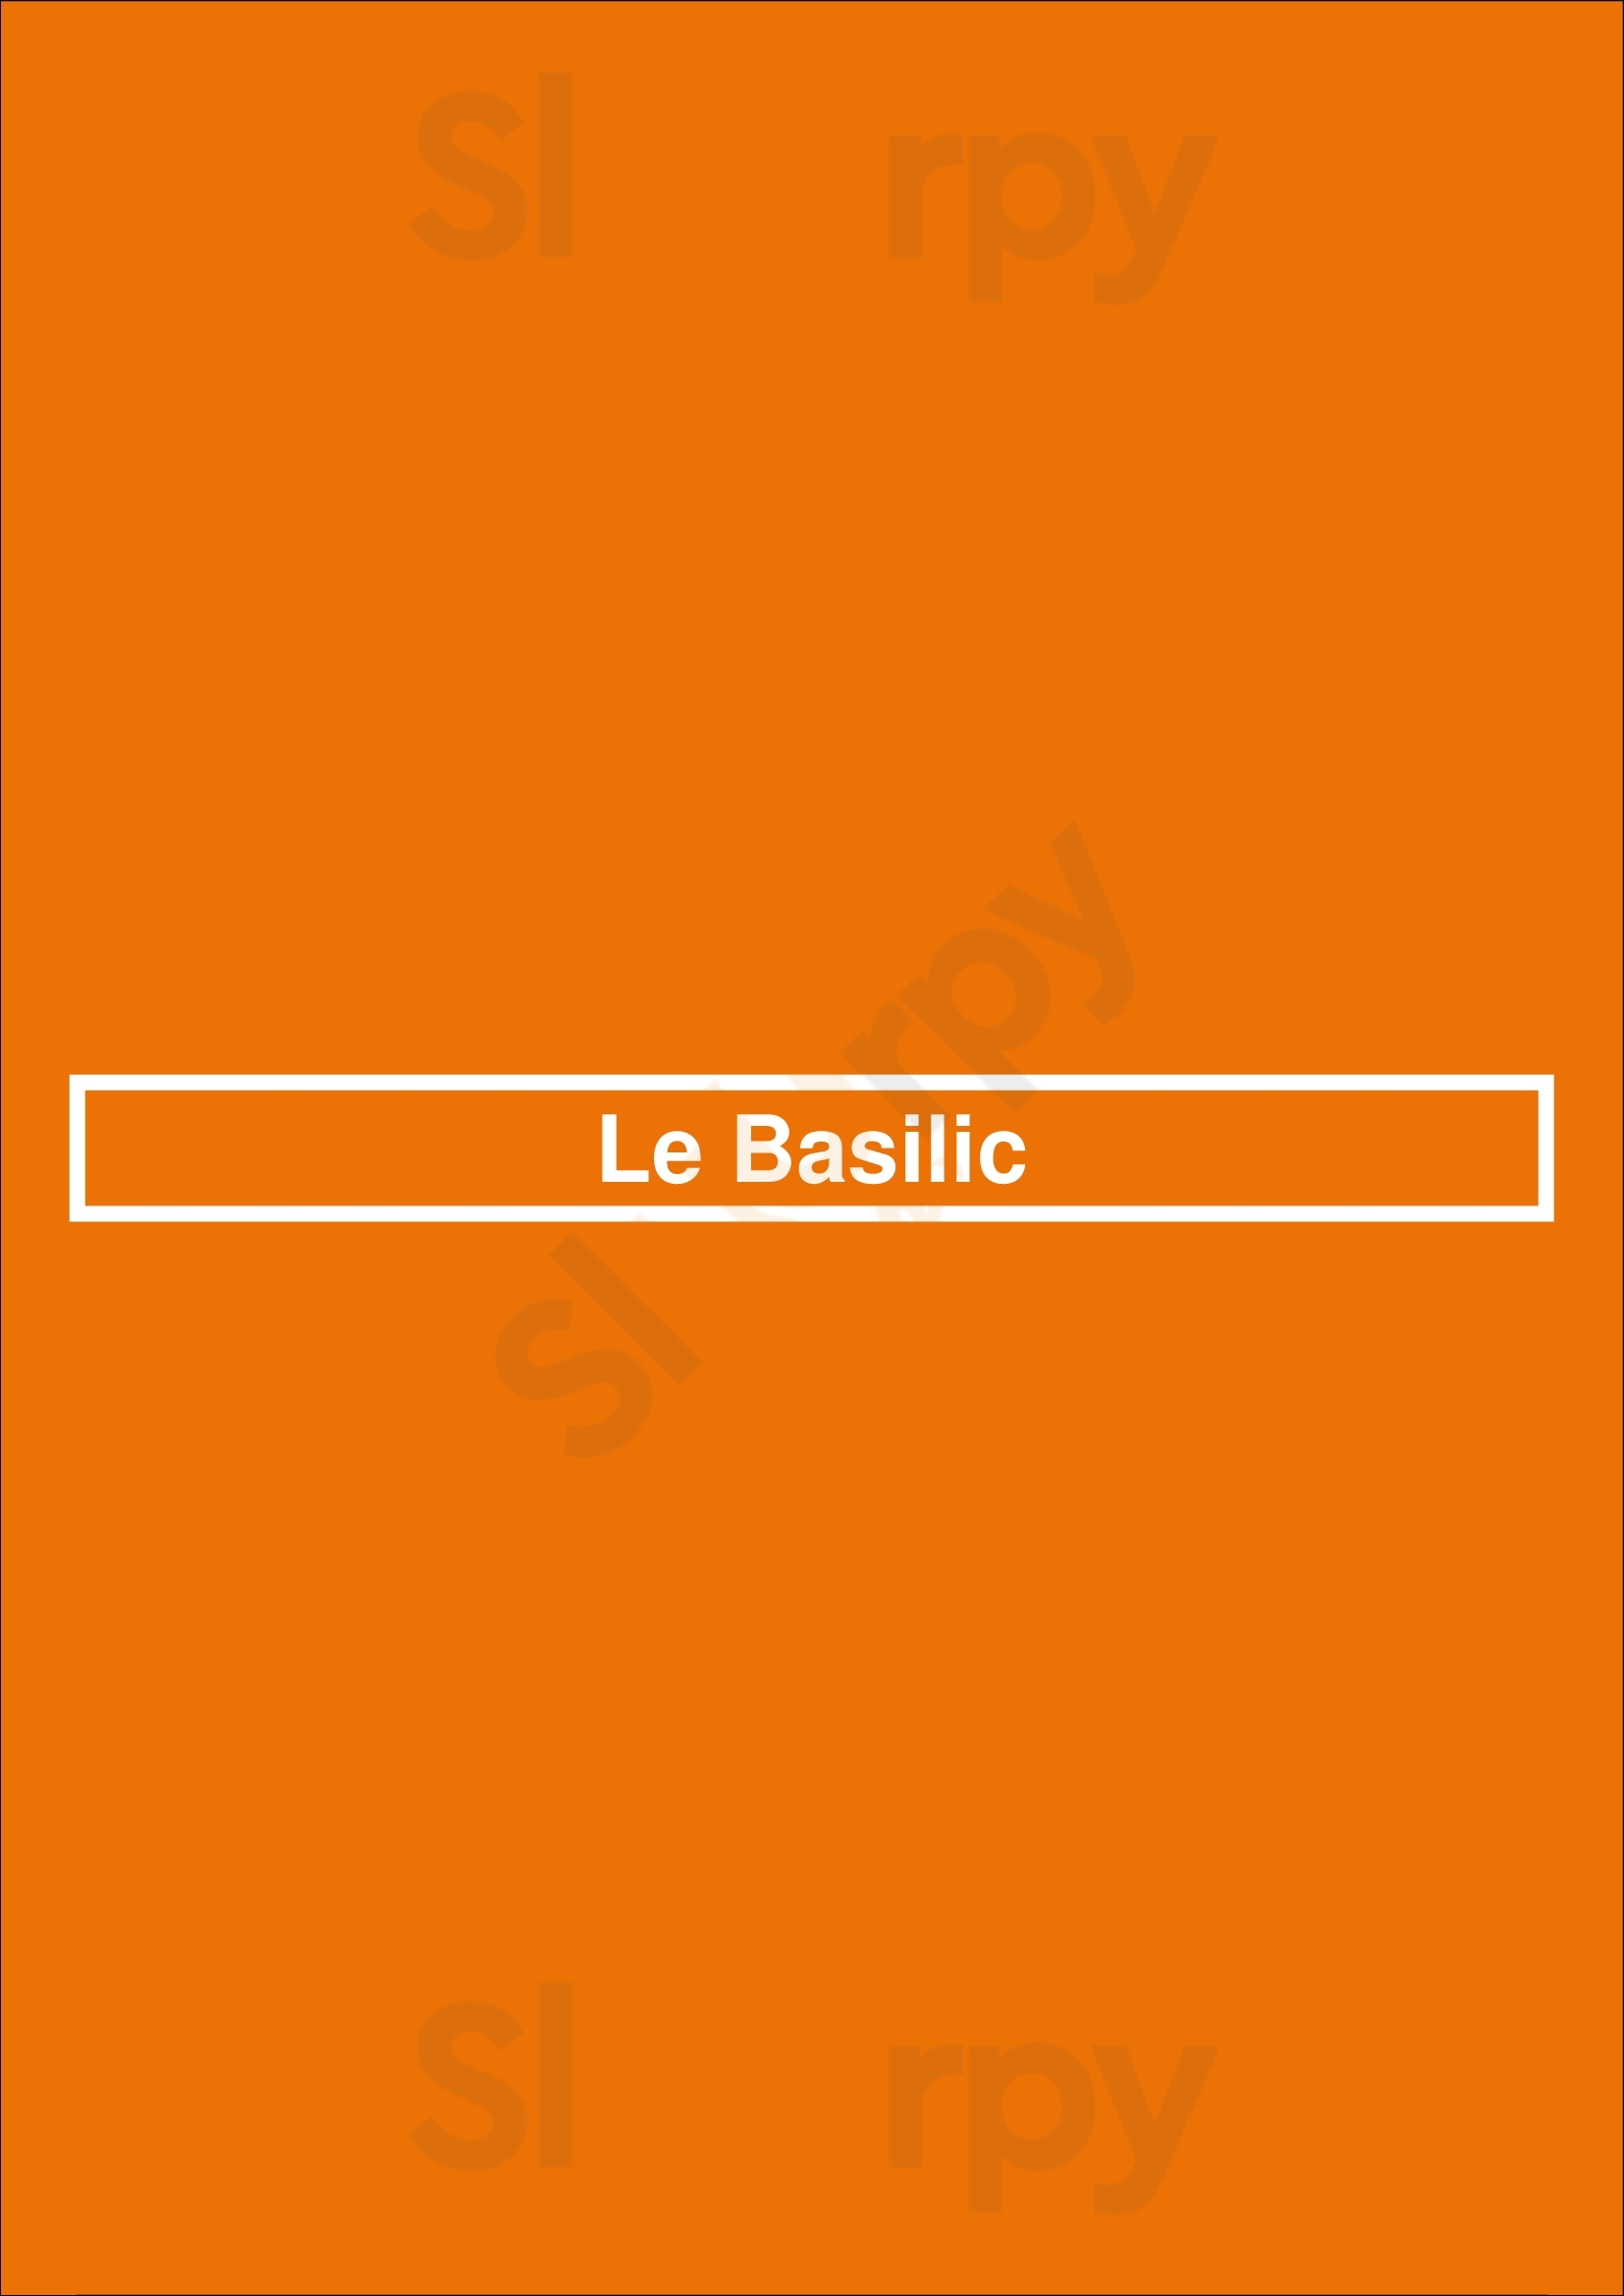 Le Basilic Paris Menu - 1